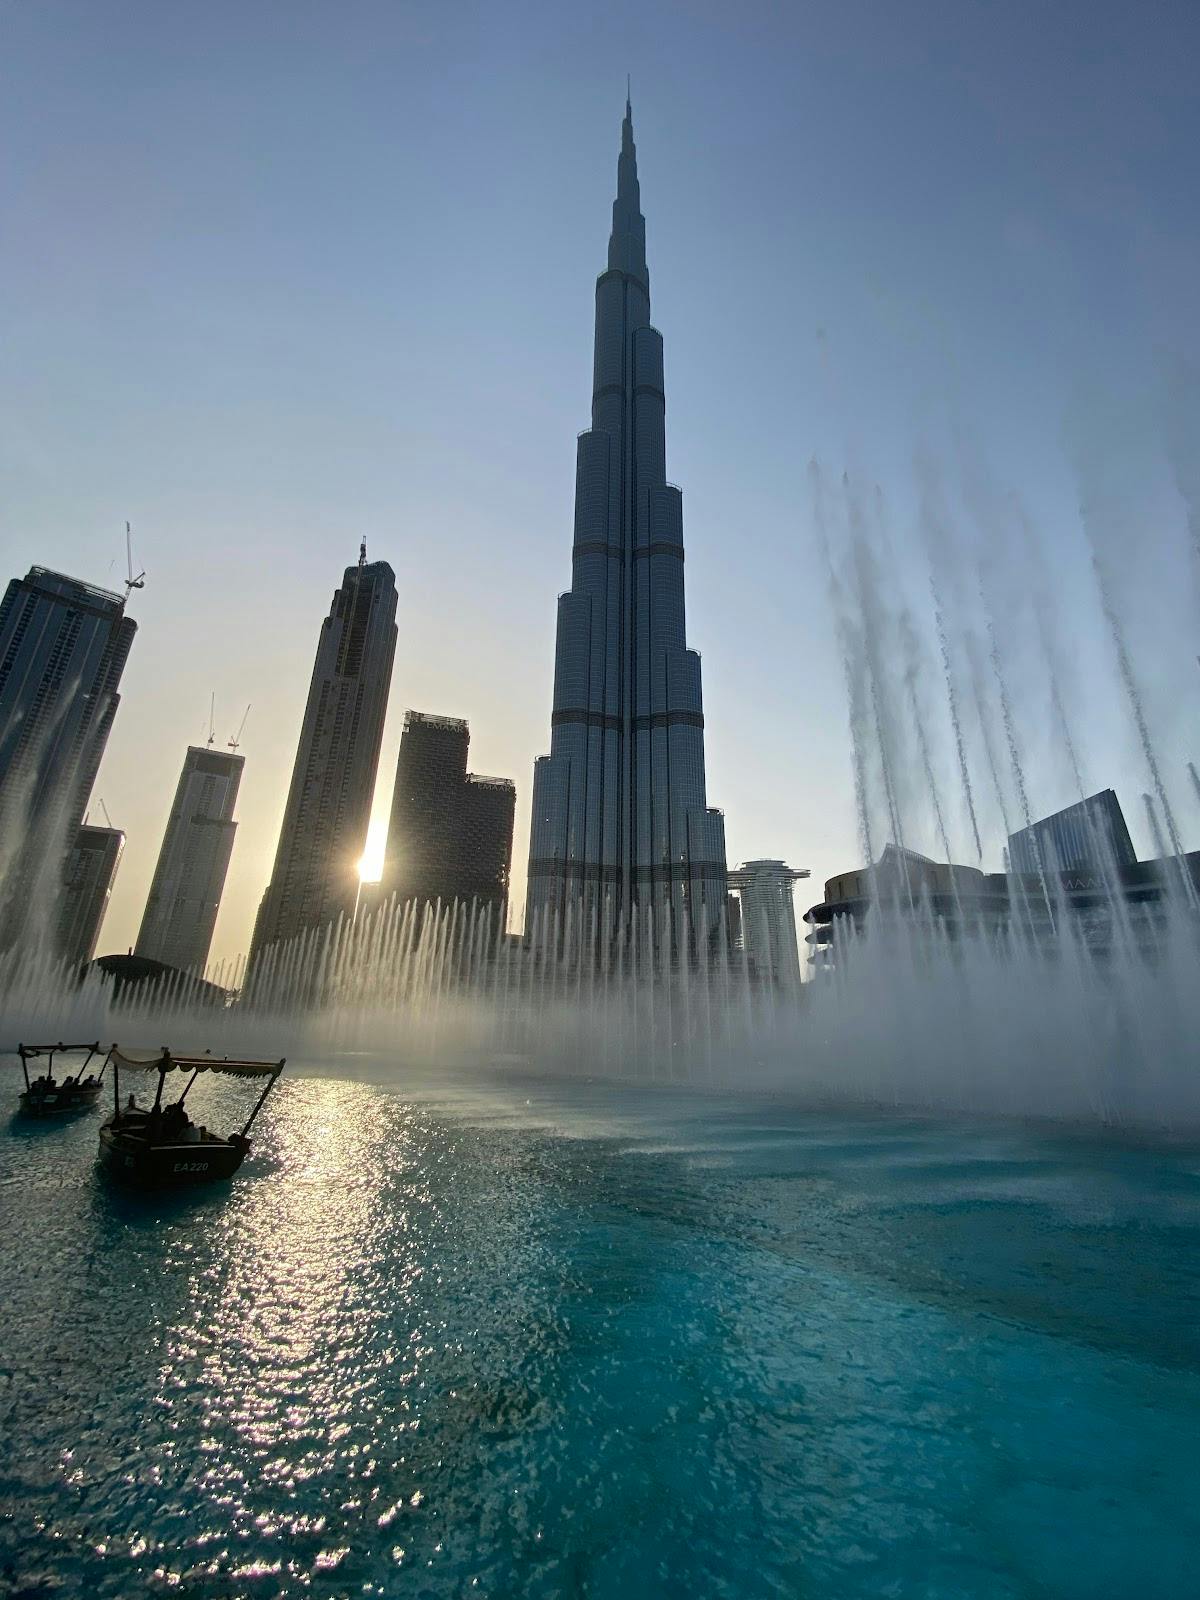 Image - Burj Khalifa Water Fountains